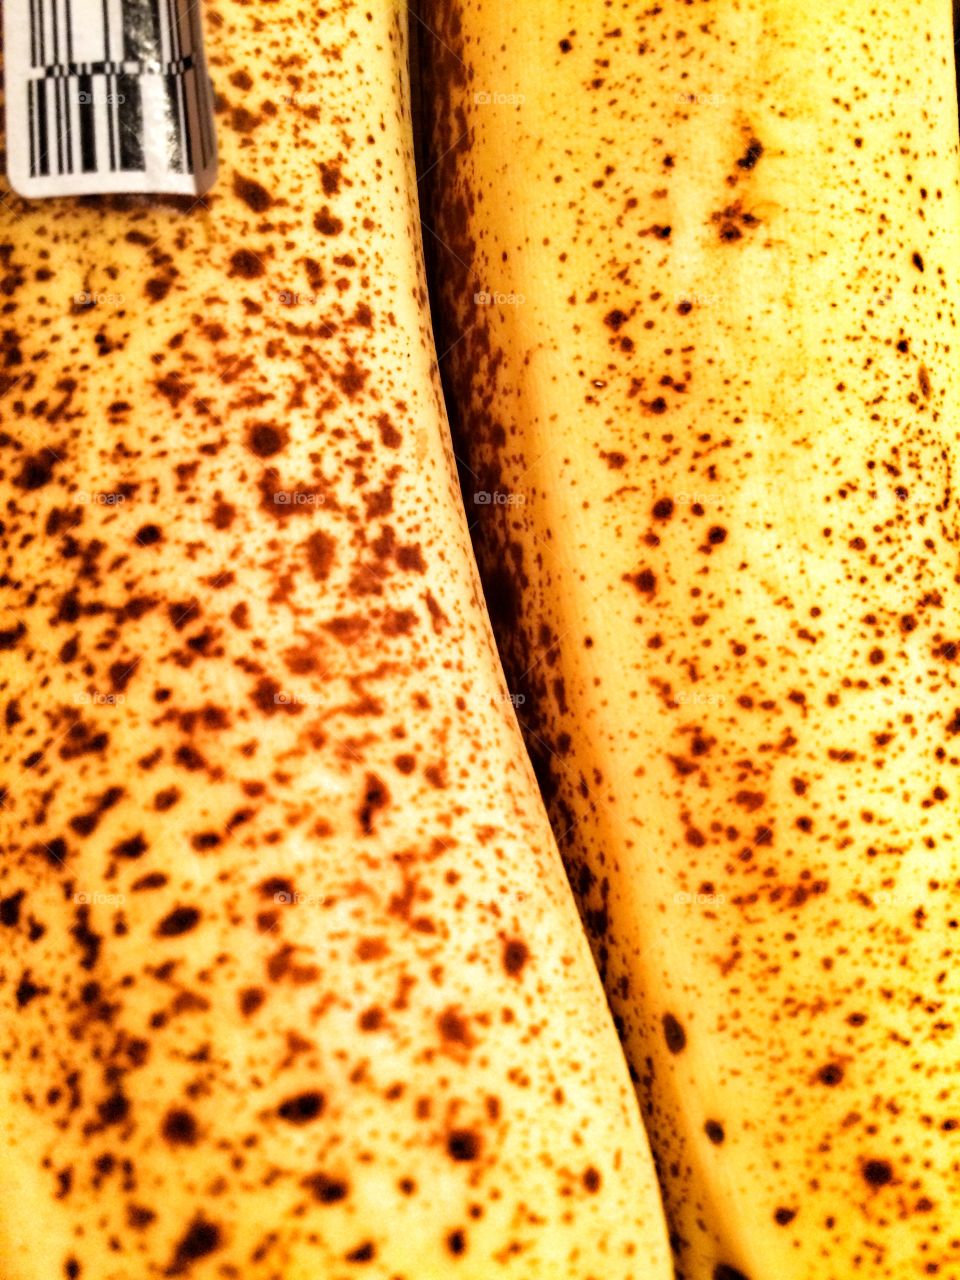 Close-up of two bananas